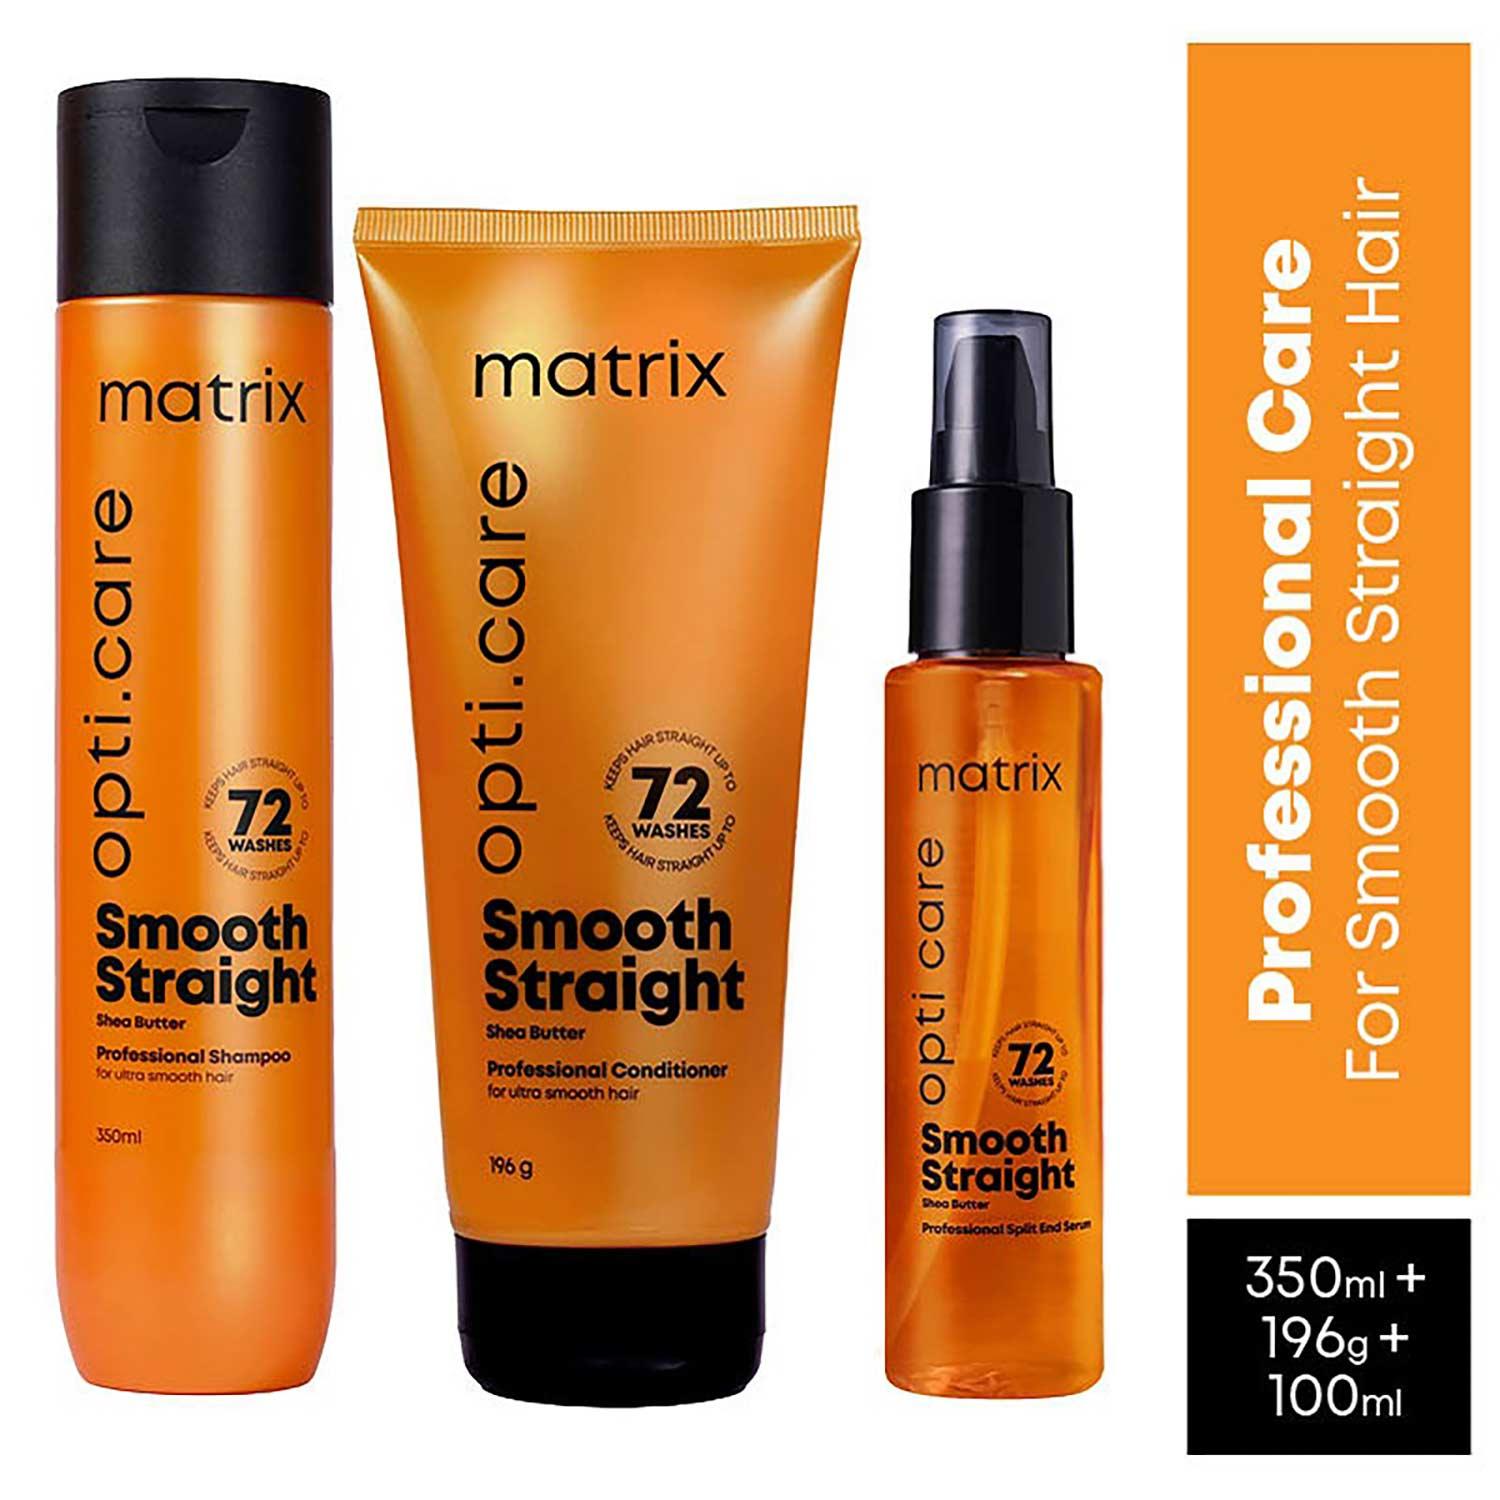 Matrix | Matrix Opti.Care Professional Haircare for Salon Smooth Straight Hair (350 ml+196 g+100 ml) Combo